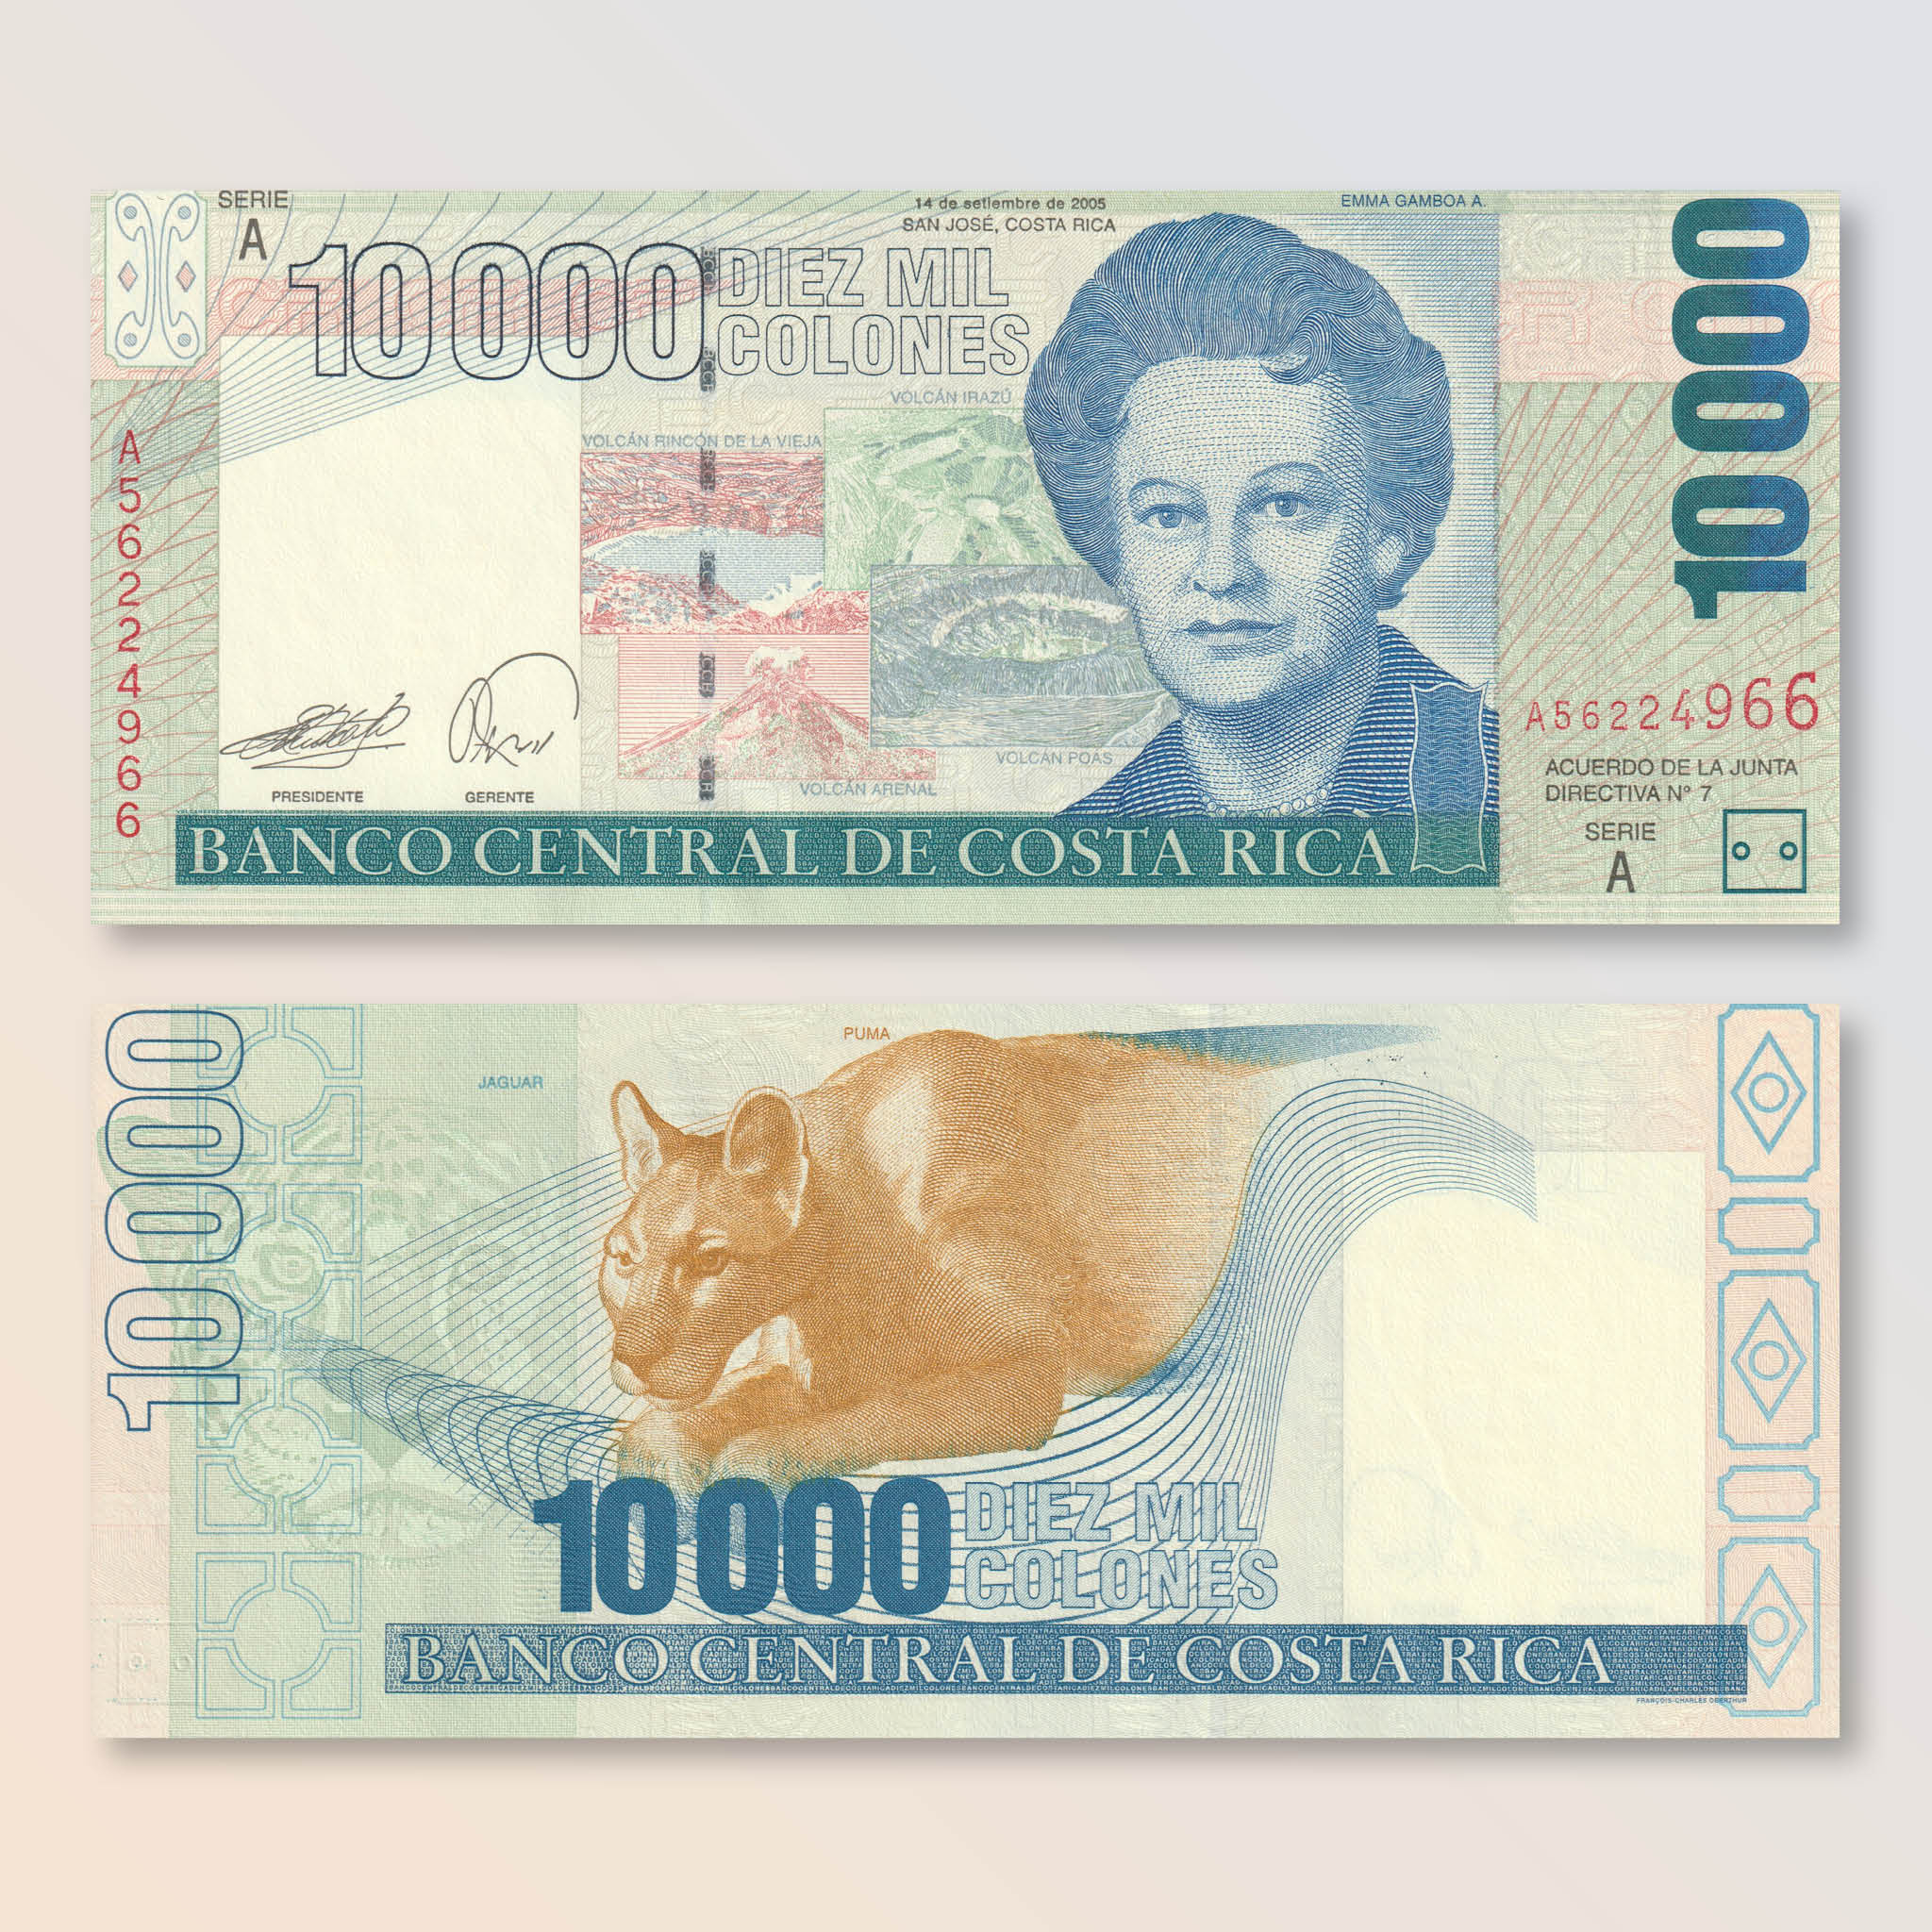 Costa Rica 10000 Colones, 2005, B551d, P267d, UNC - Robert's World Money - World Banknotes